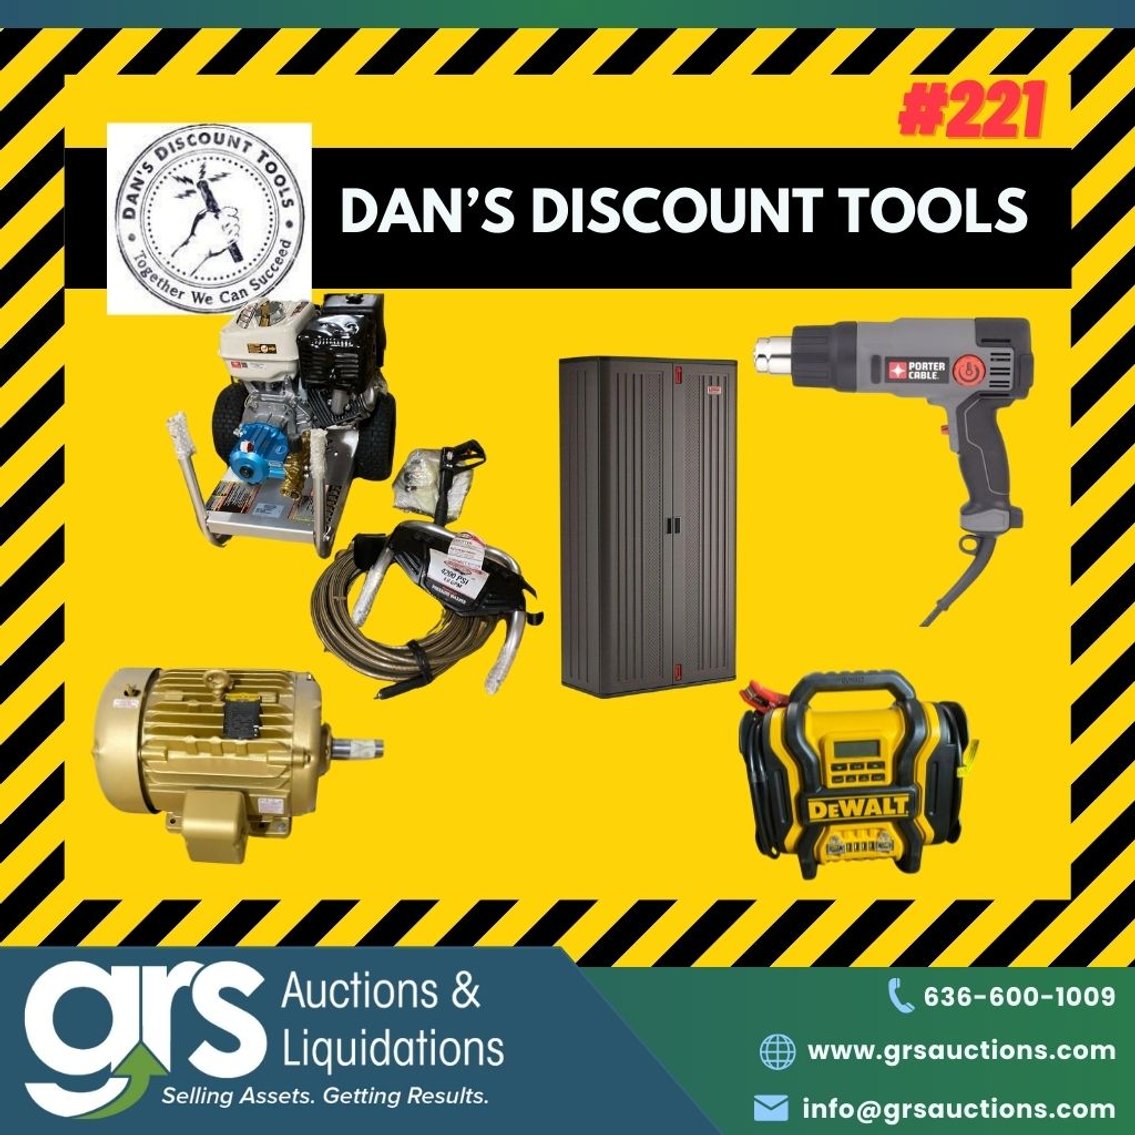 Dan's Discount Tools #221